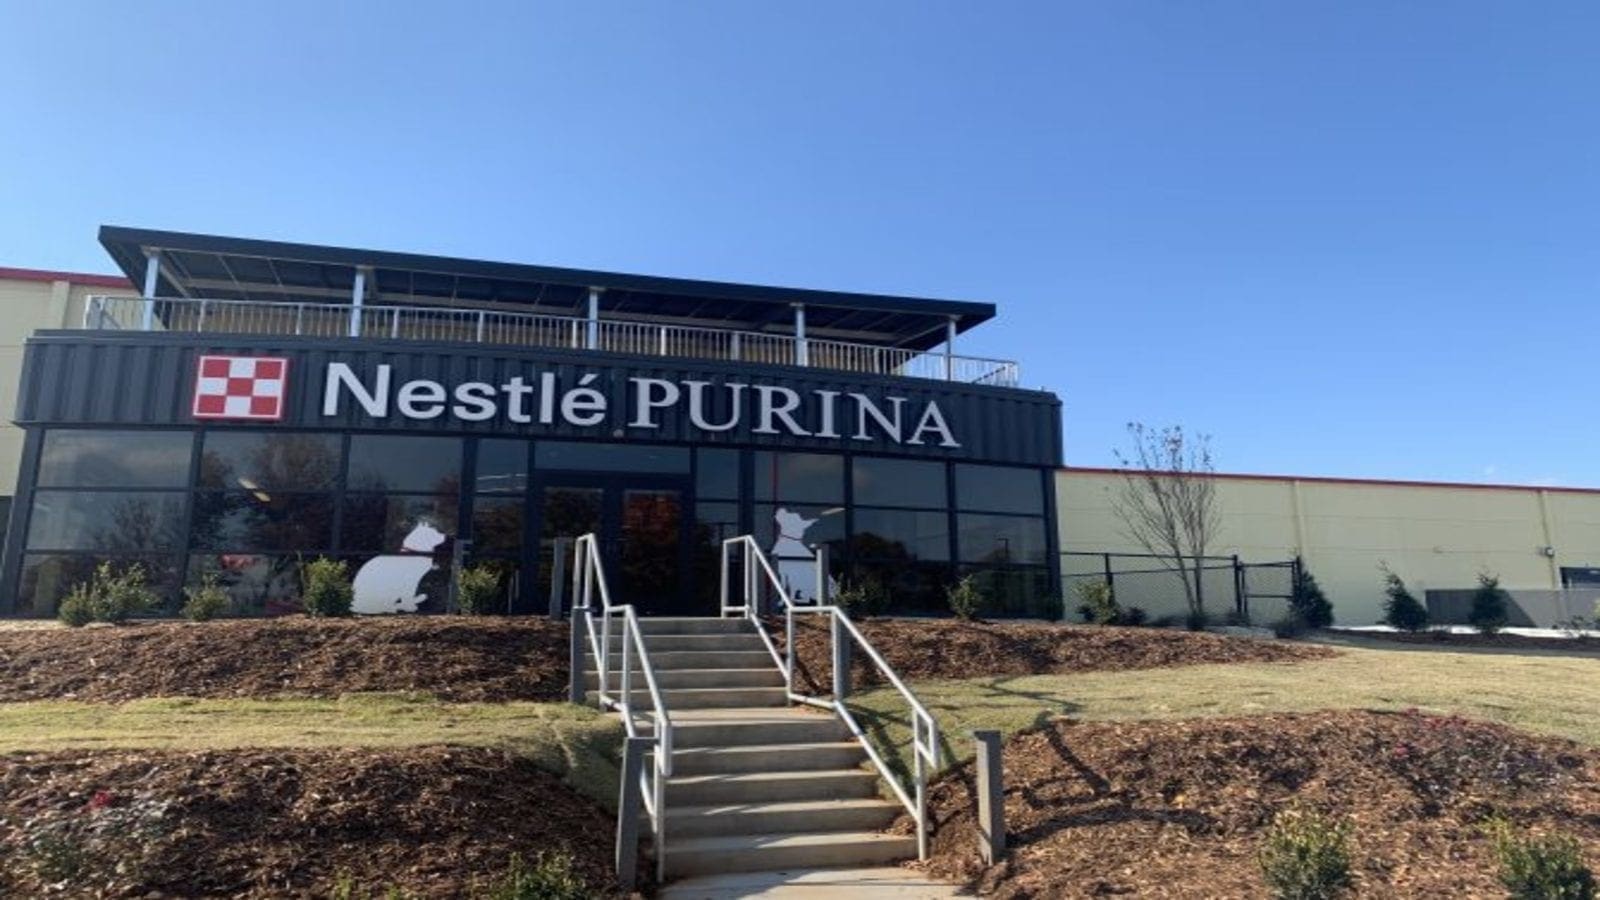 Nestlé Purina invests US$99M into Mexico pet food facility